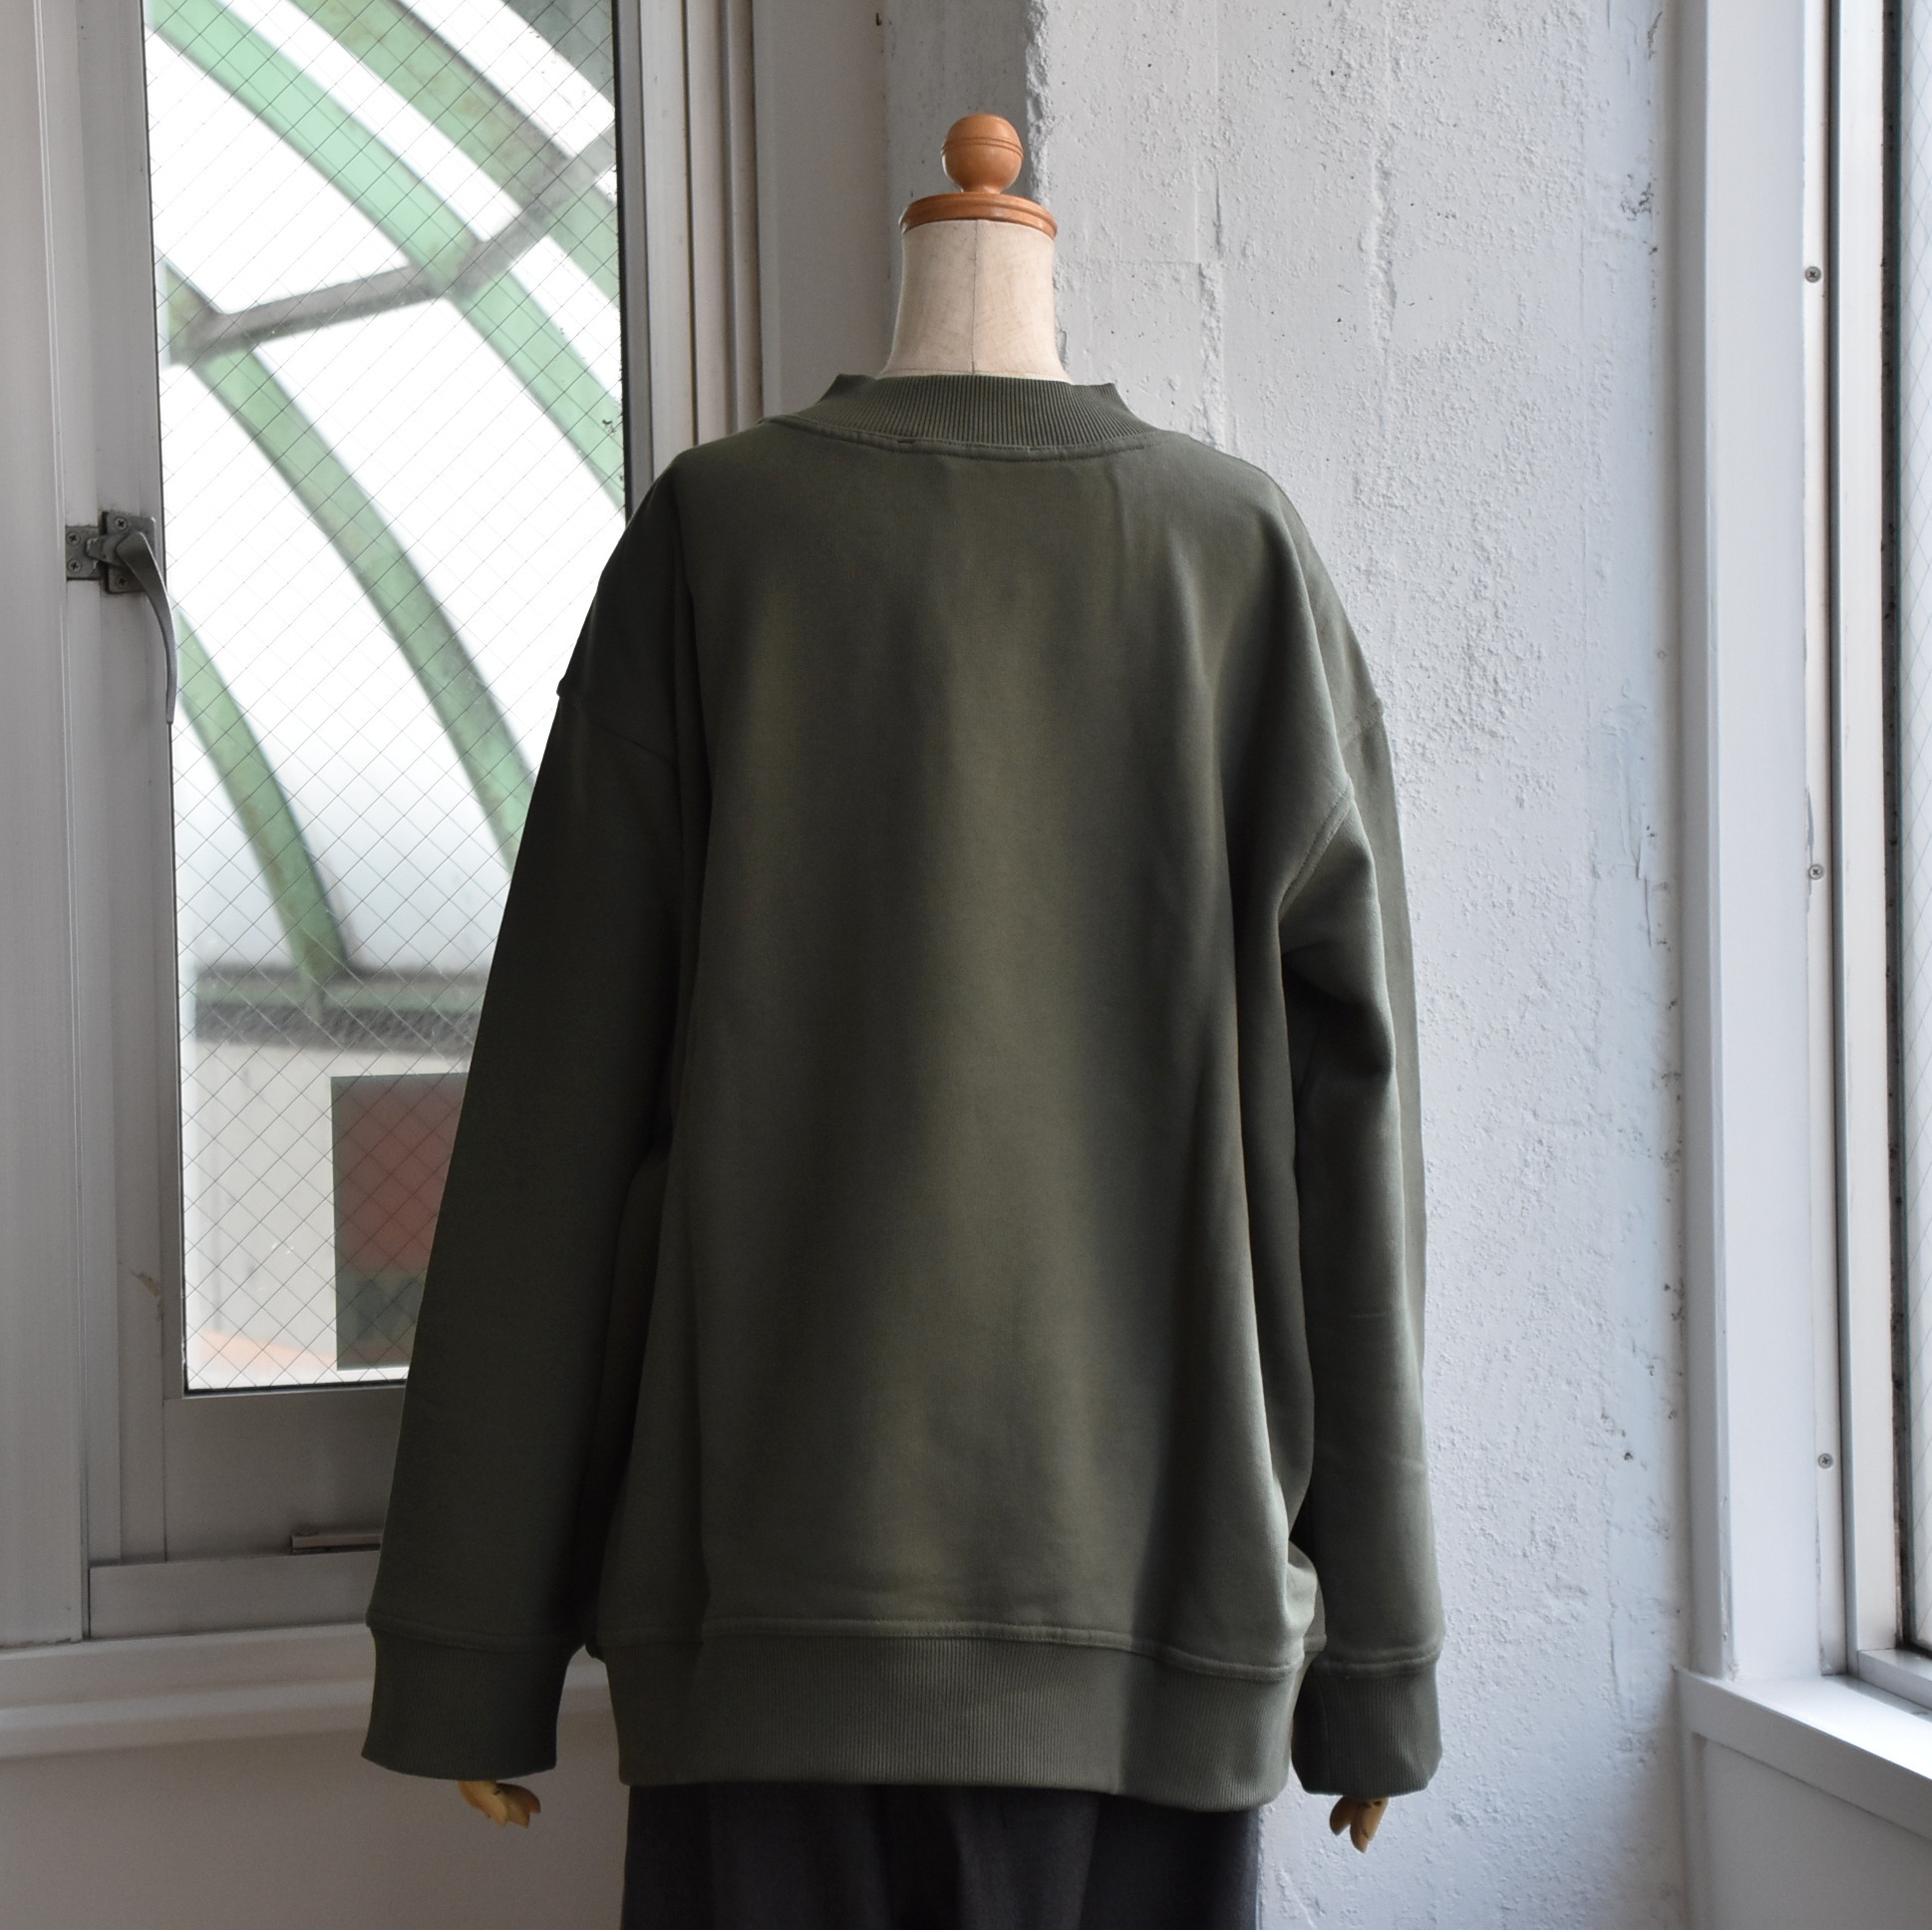 y40% off salezSOFIE D'HOORE(\tB[h[) / Long sleeve C-neck sweatshirt with top stichy2FWJz #TASTE-AA(4)